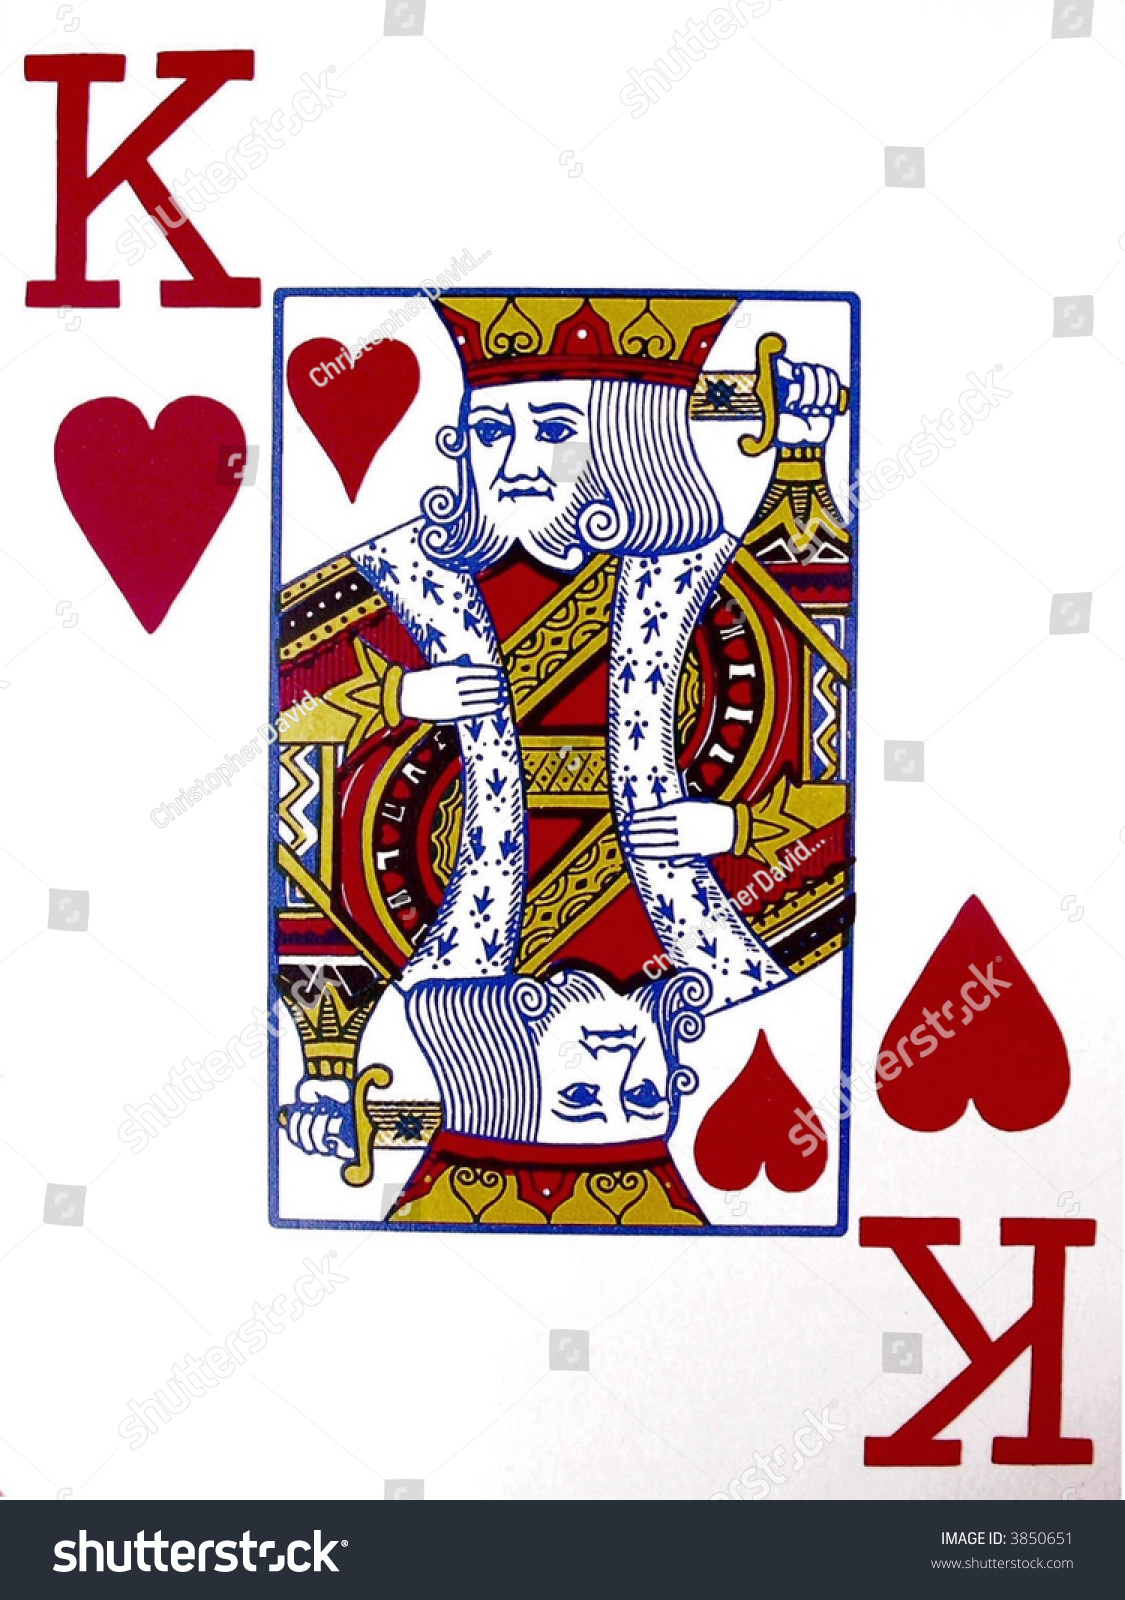 King Hearts Stock Illustration 3850651 - Shutterstock